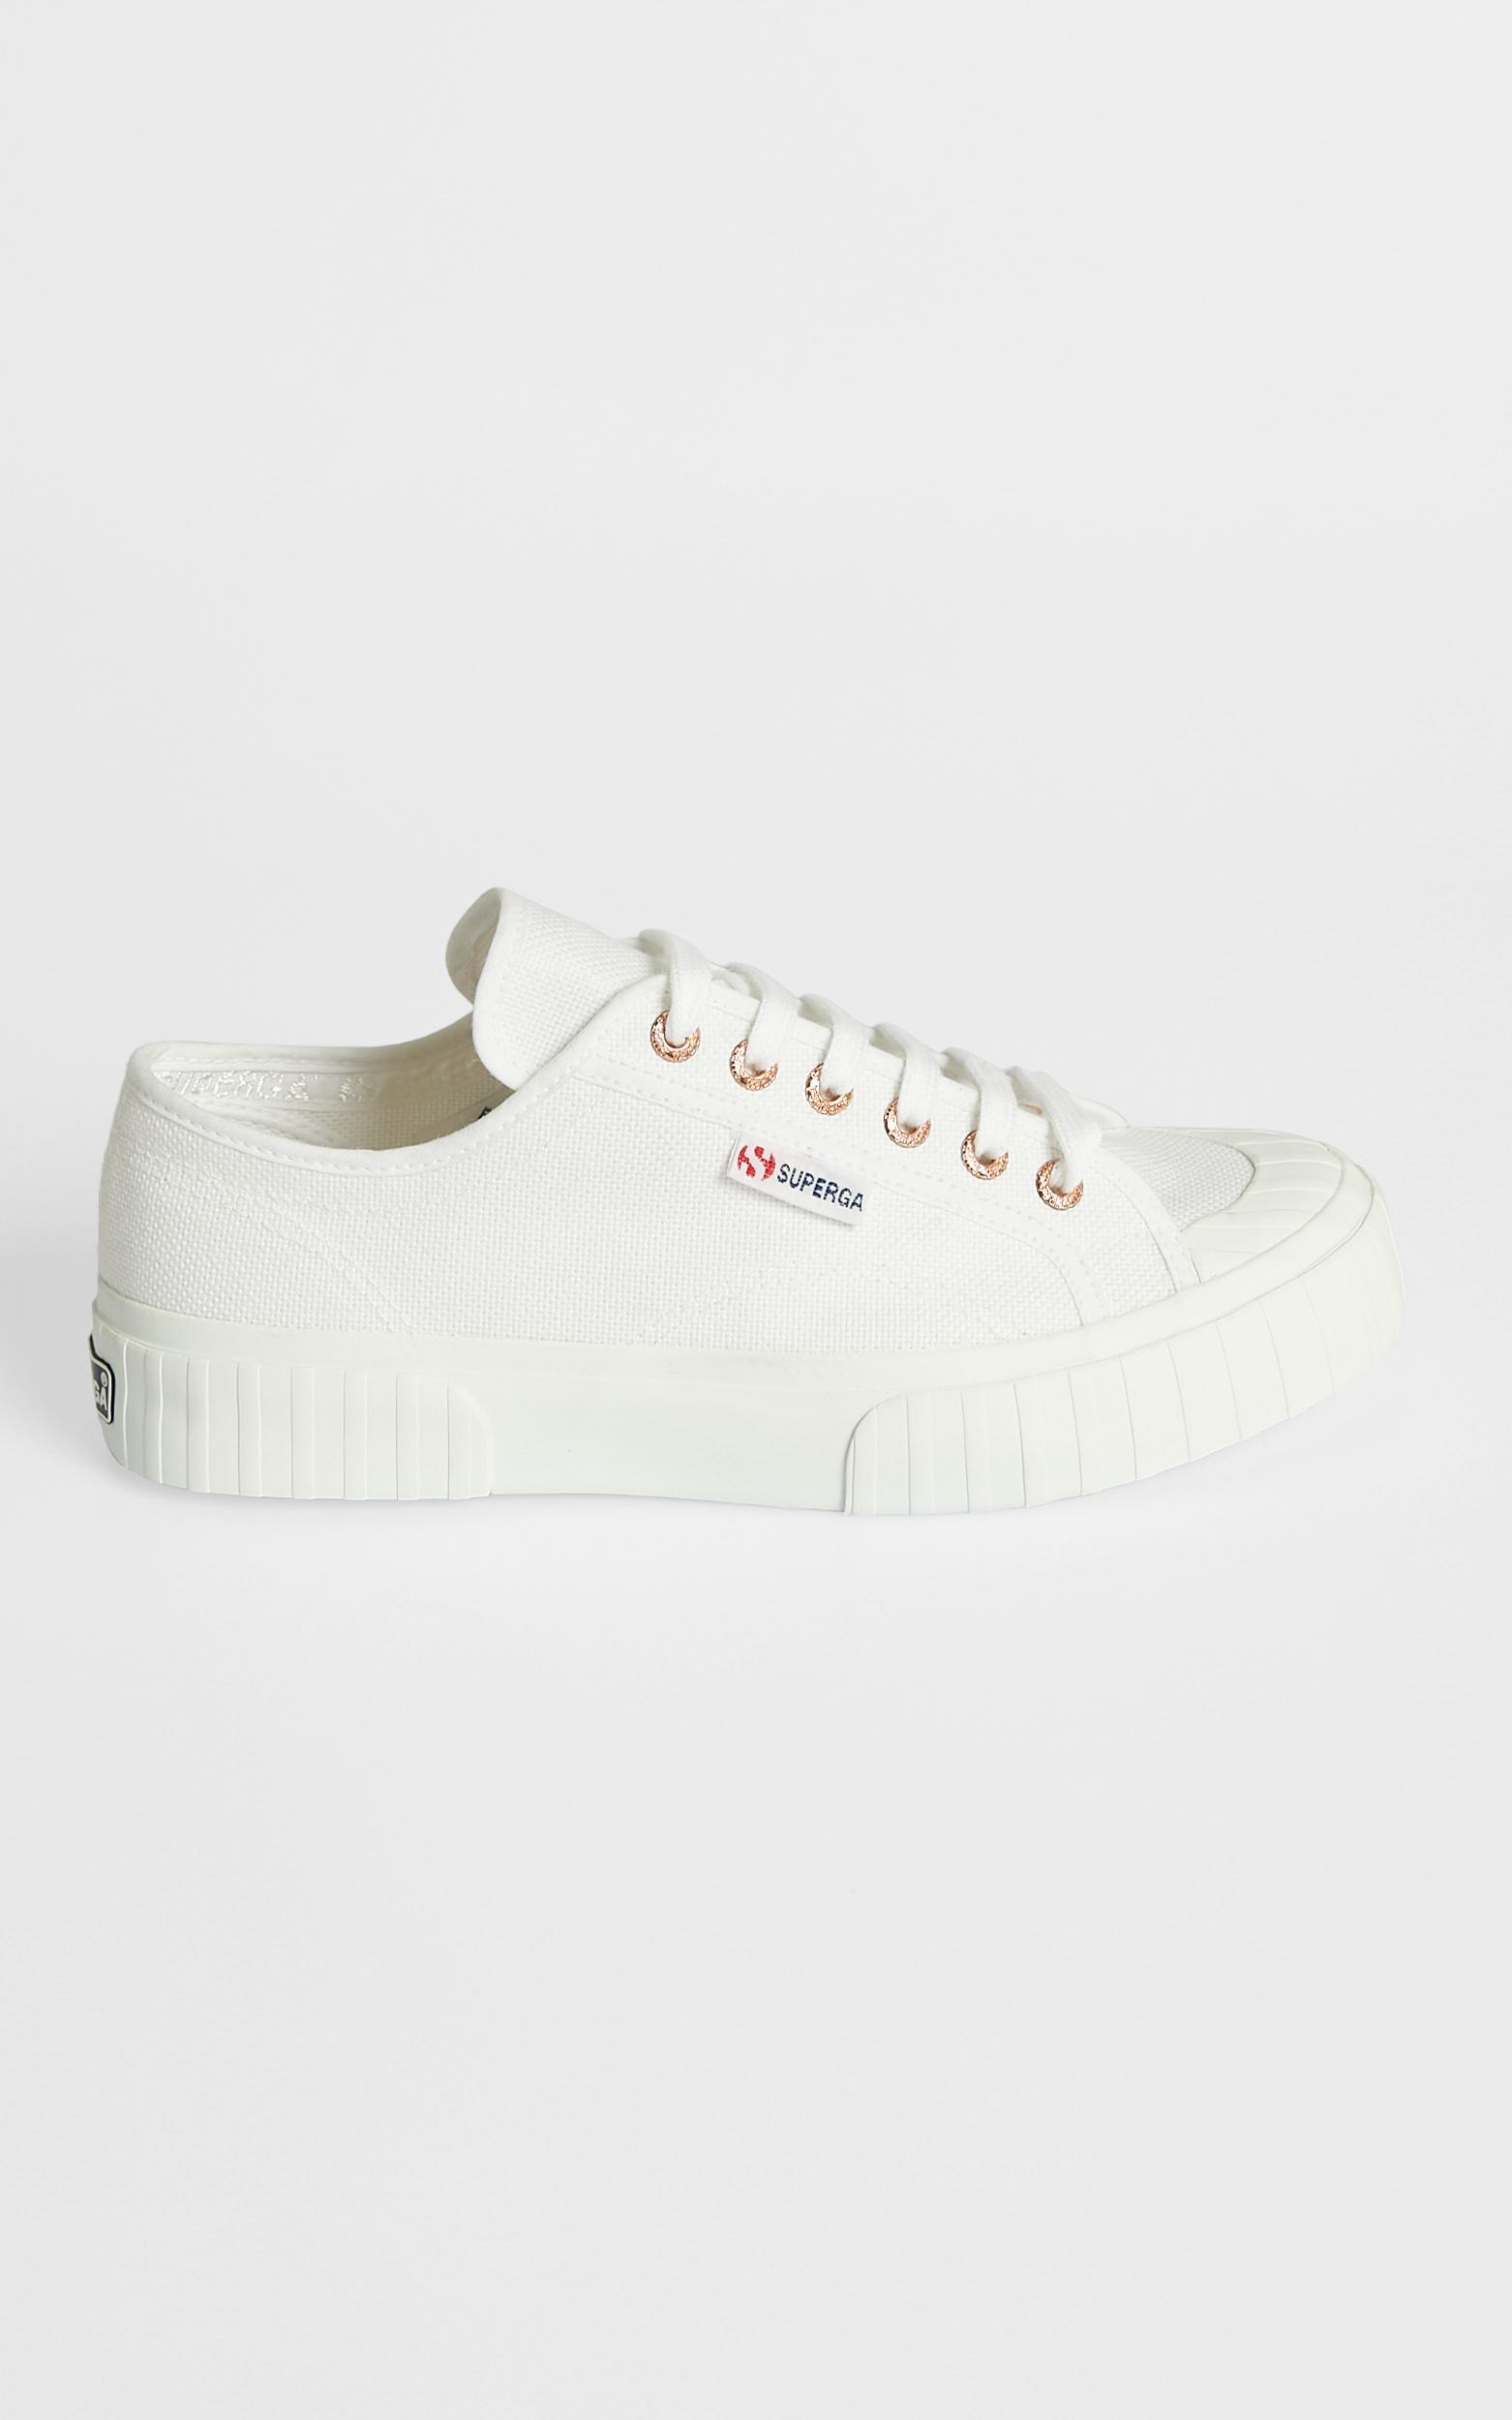 Superga - 2630 Cotu Sneakers in White - Rose Gold - 05, RSG1, hi-res image number null